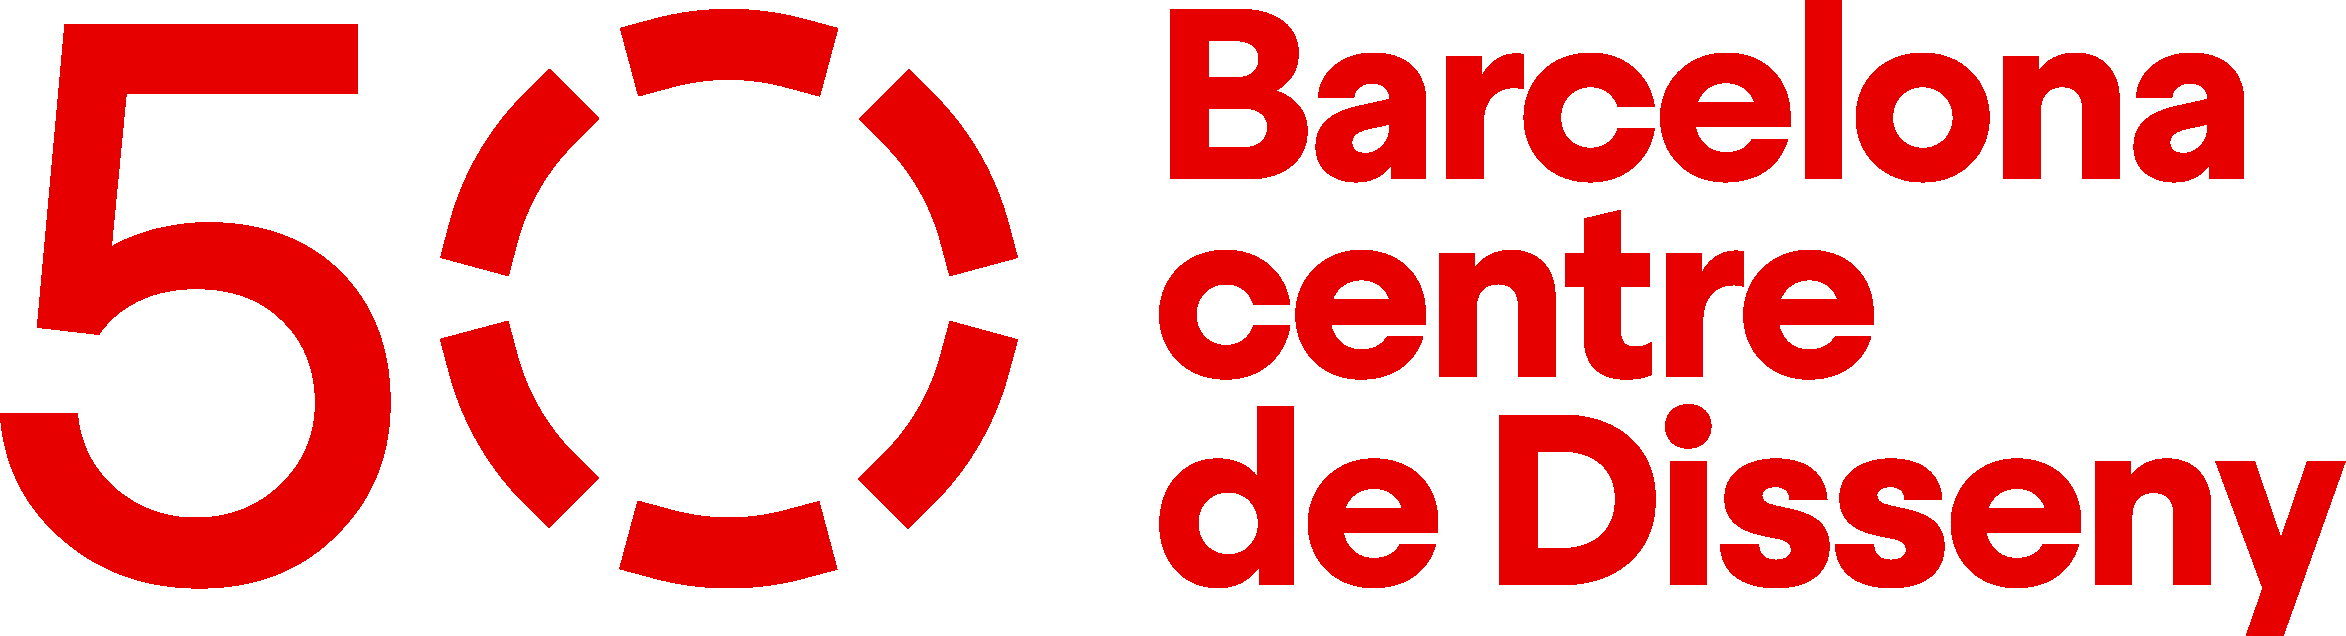 BCD (Barcelona Centre de Disseny)BCD (Barcelona Centre de Disseny)